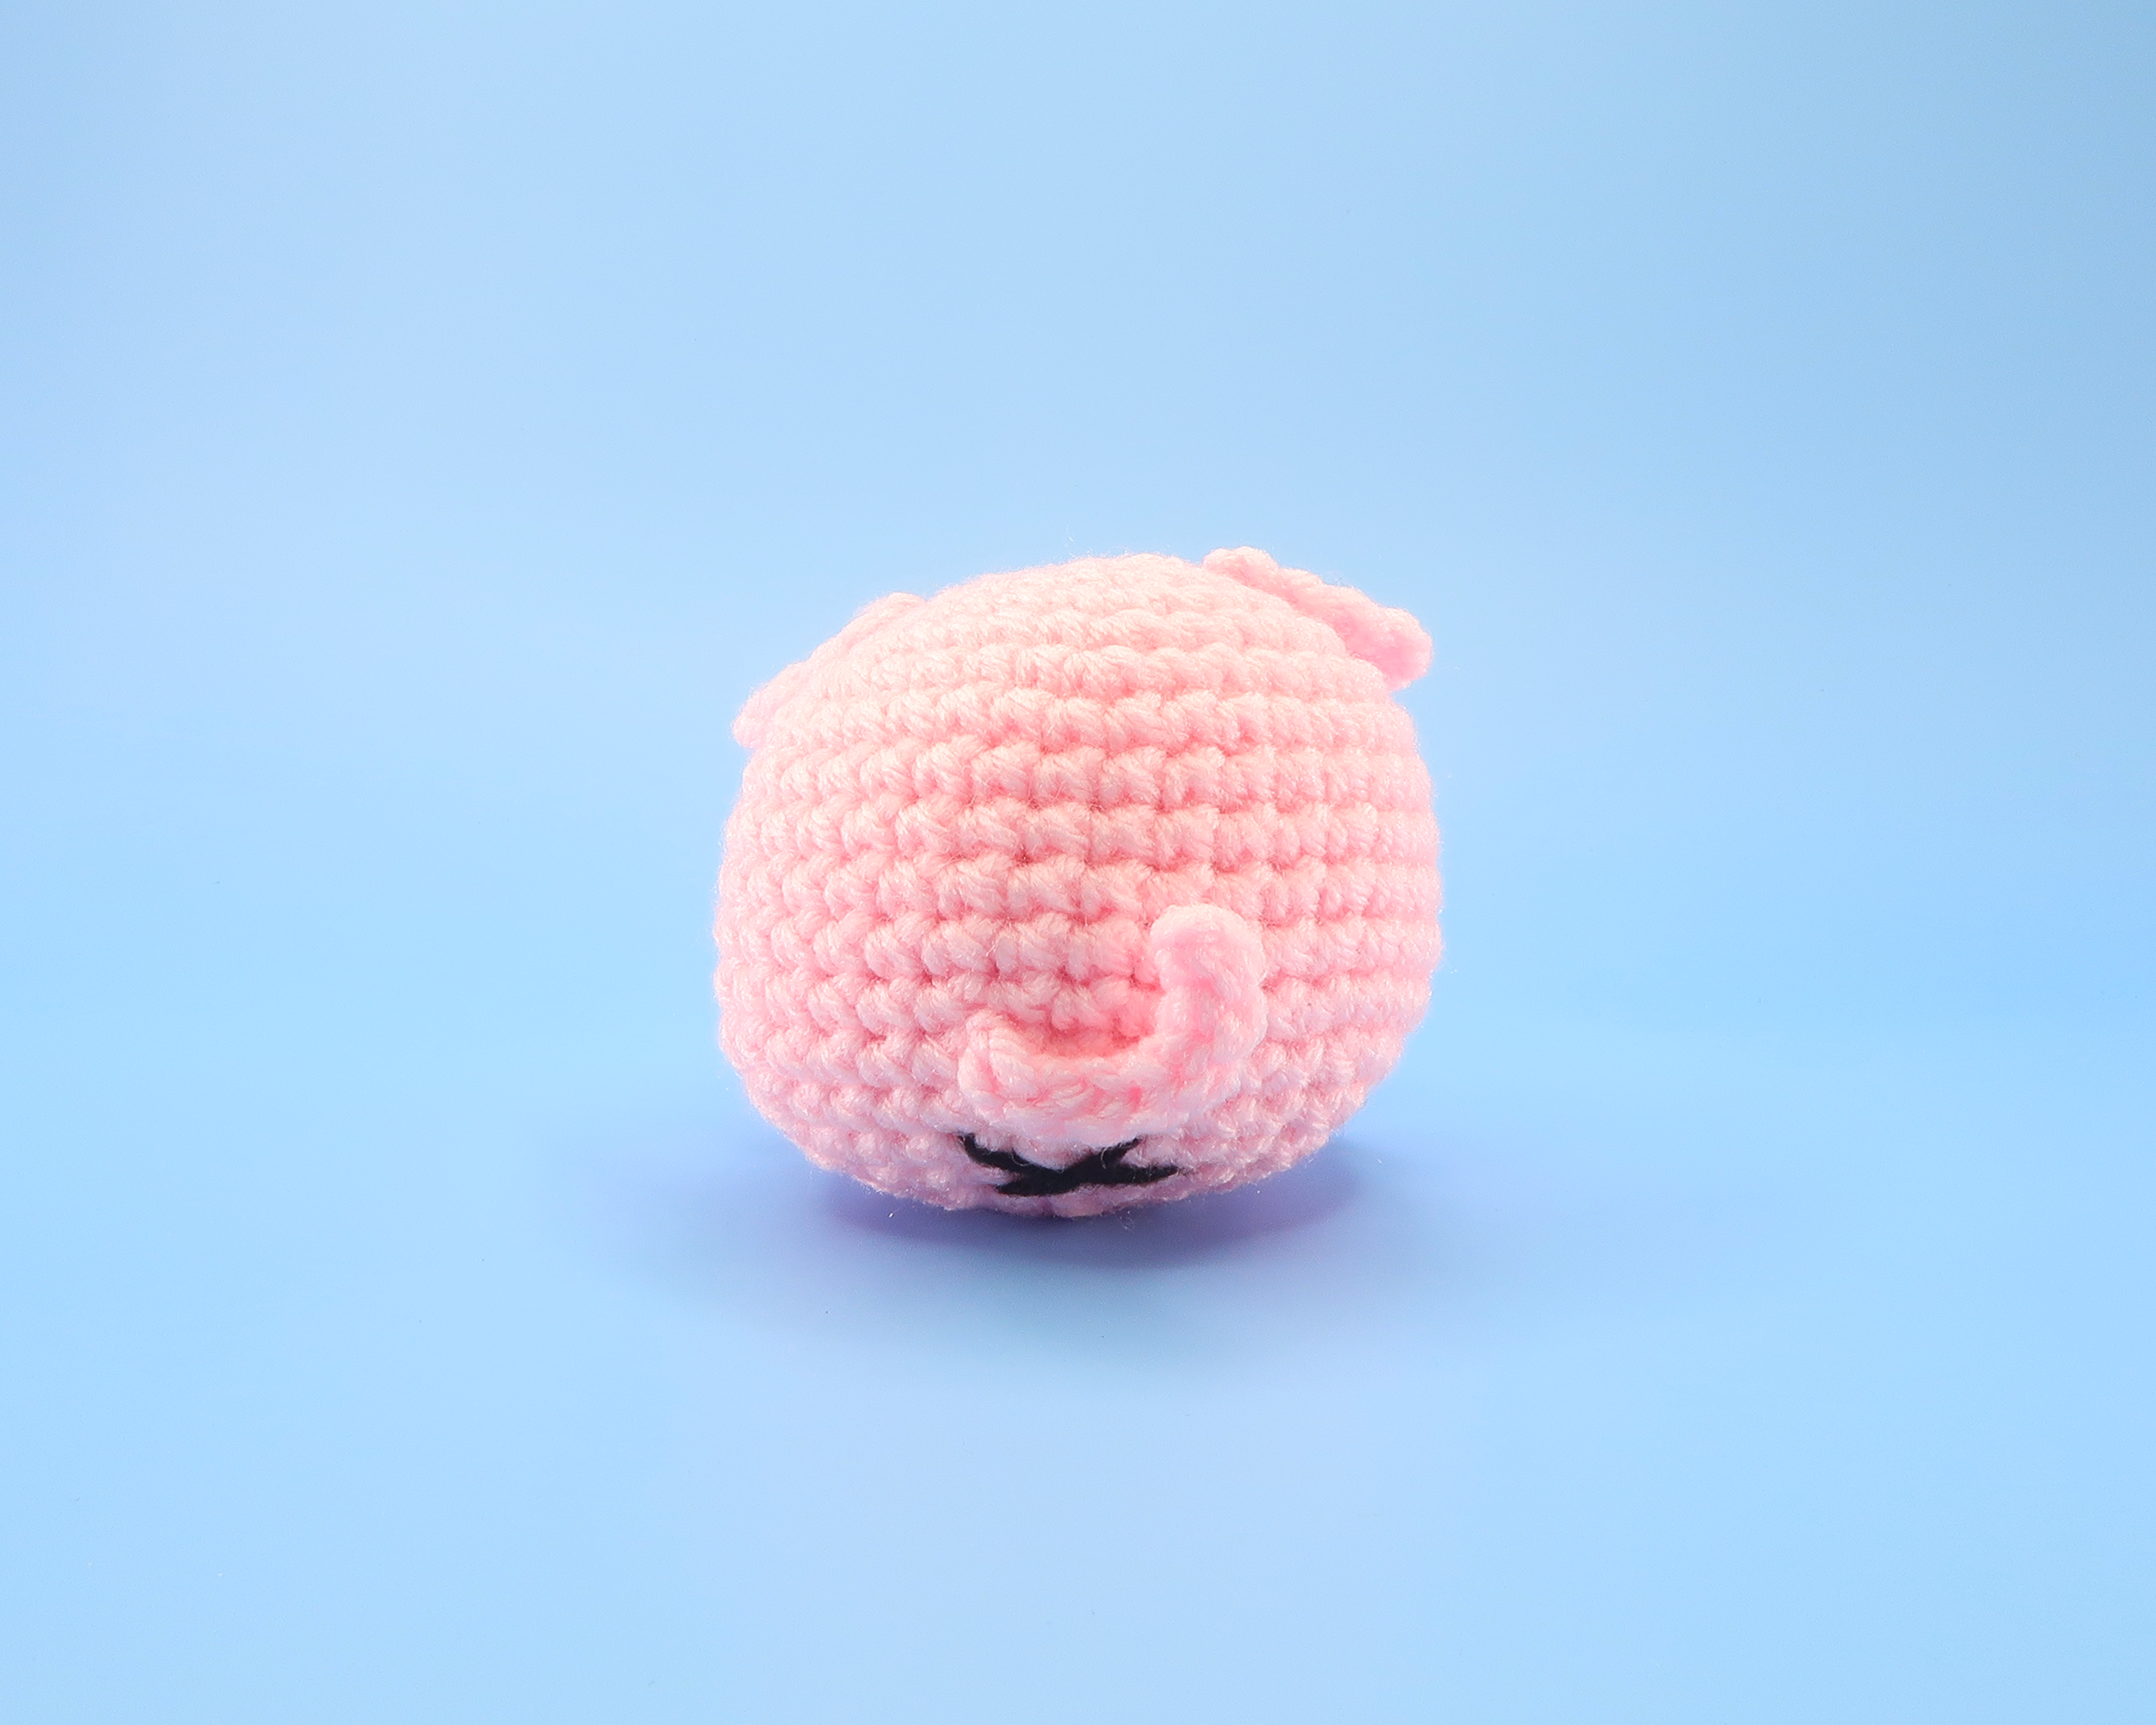 Pig Ball Crochet Kit & Pattern